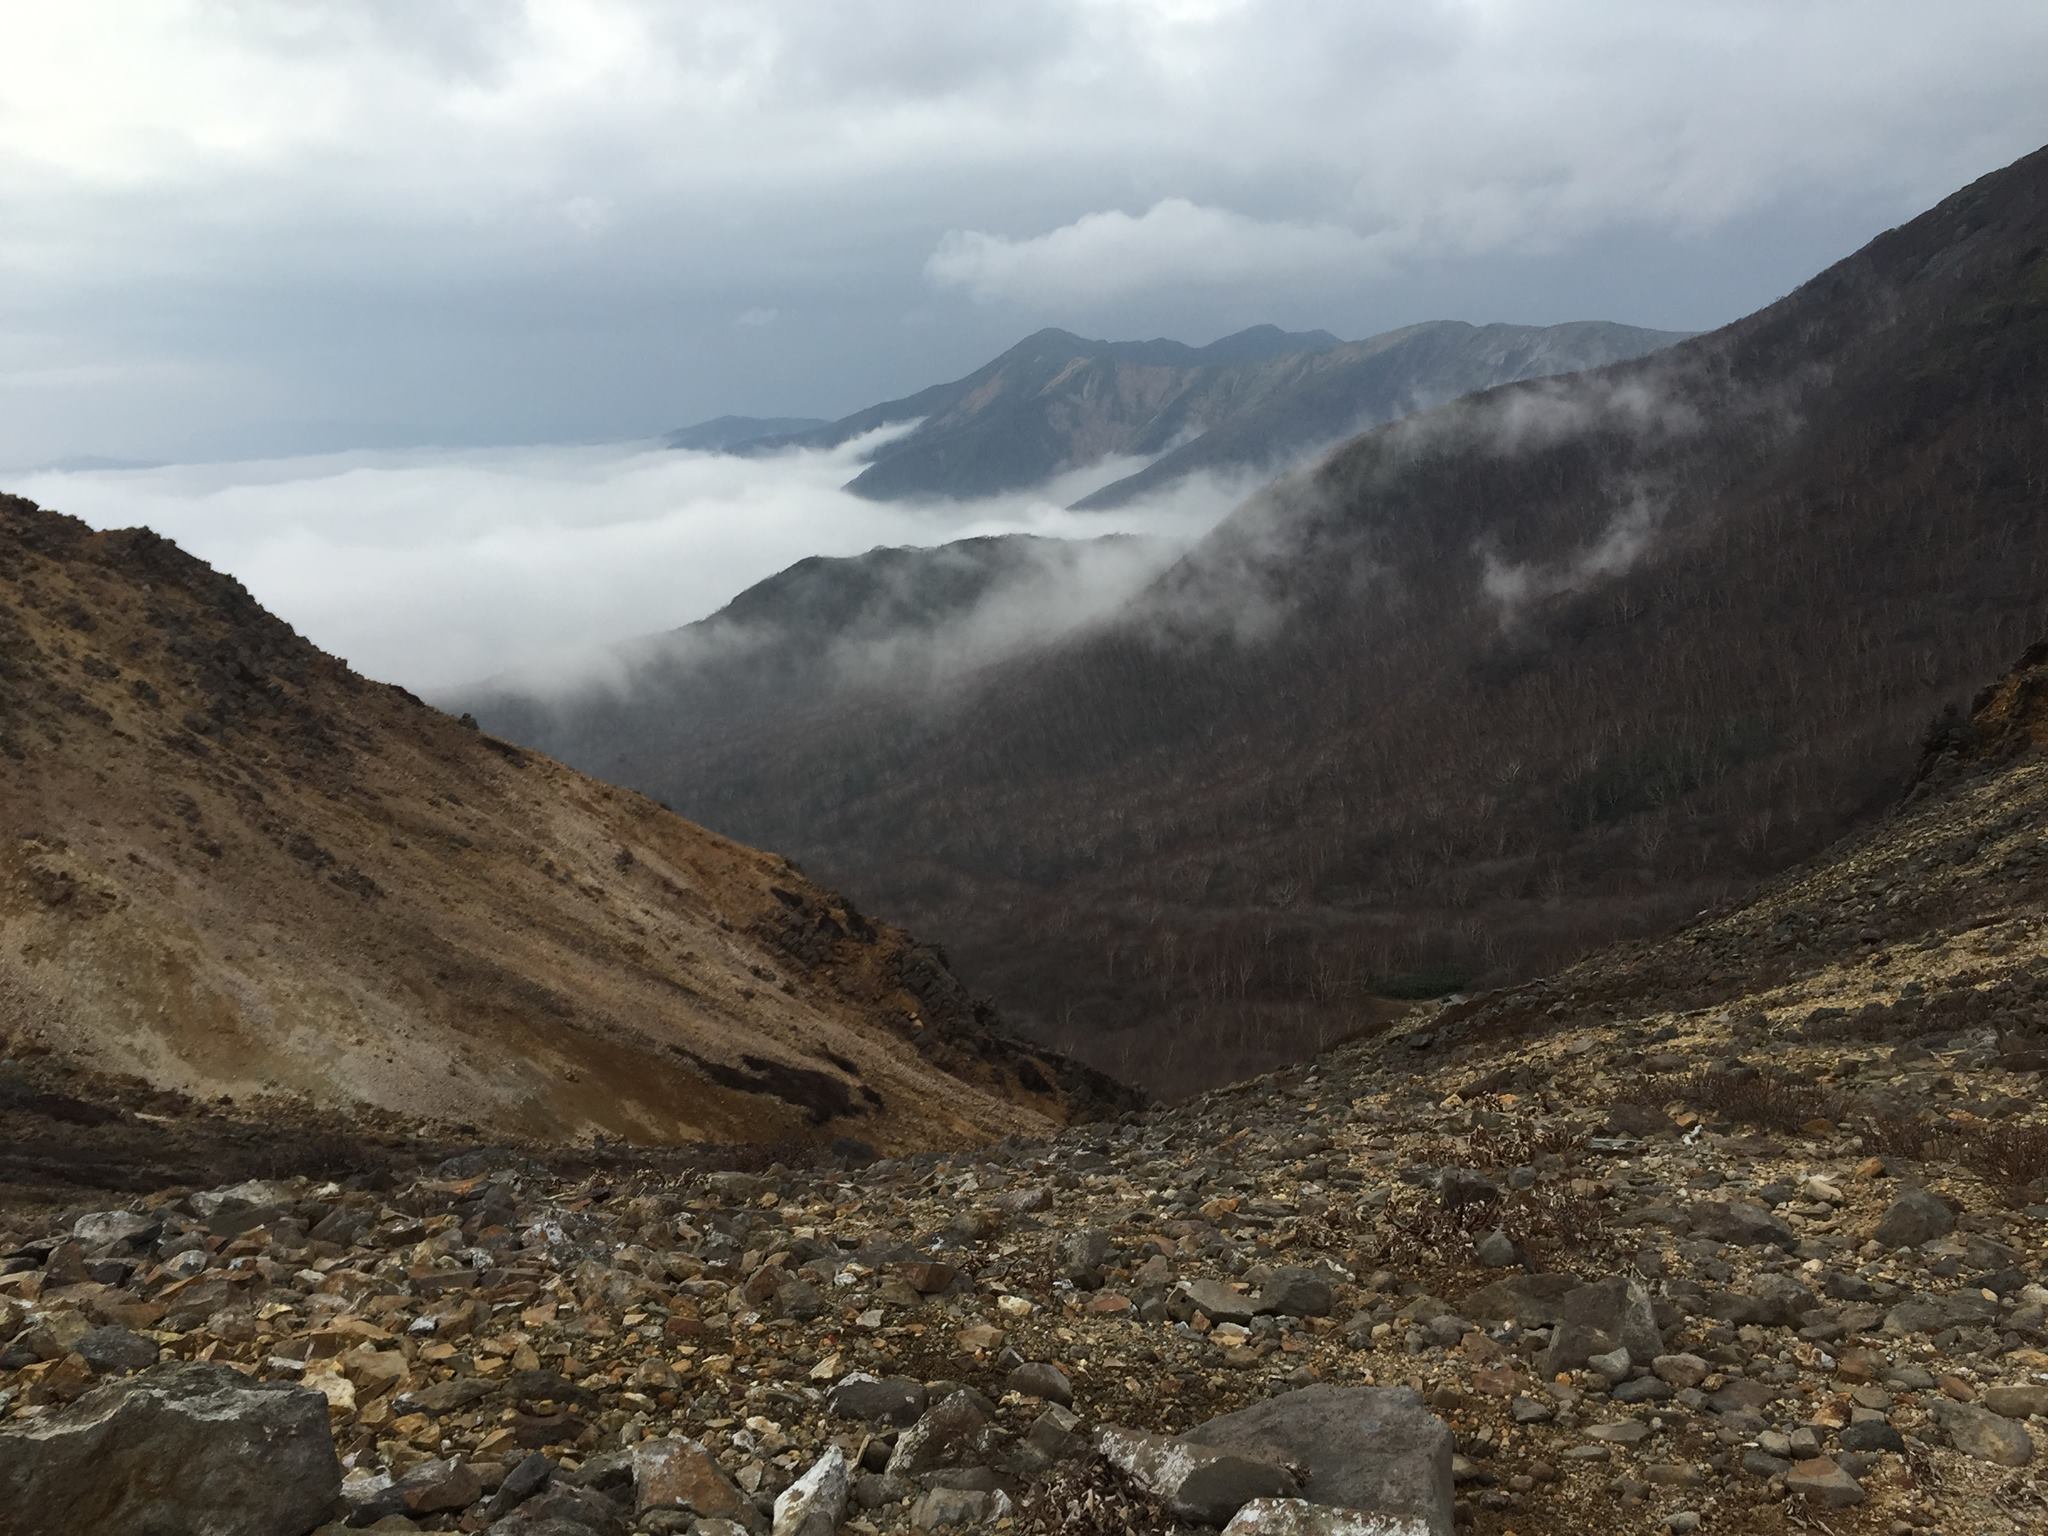 Steamy Mount Nasu, the Five Peaks